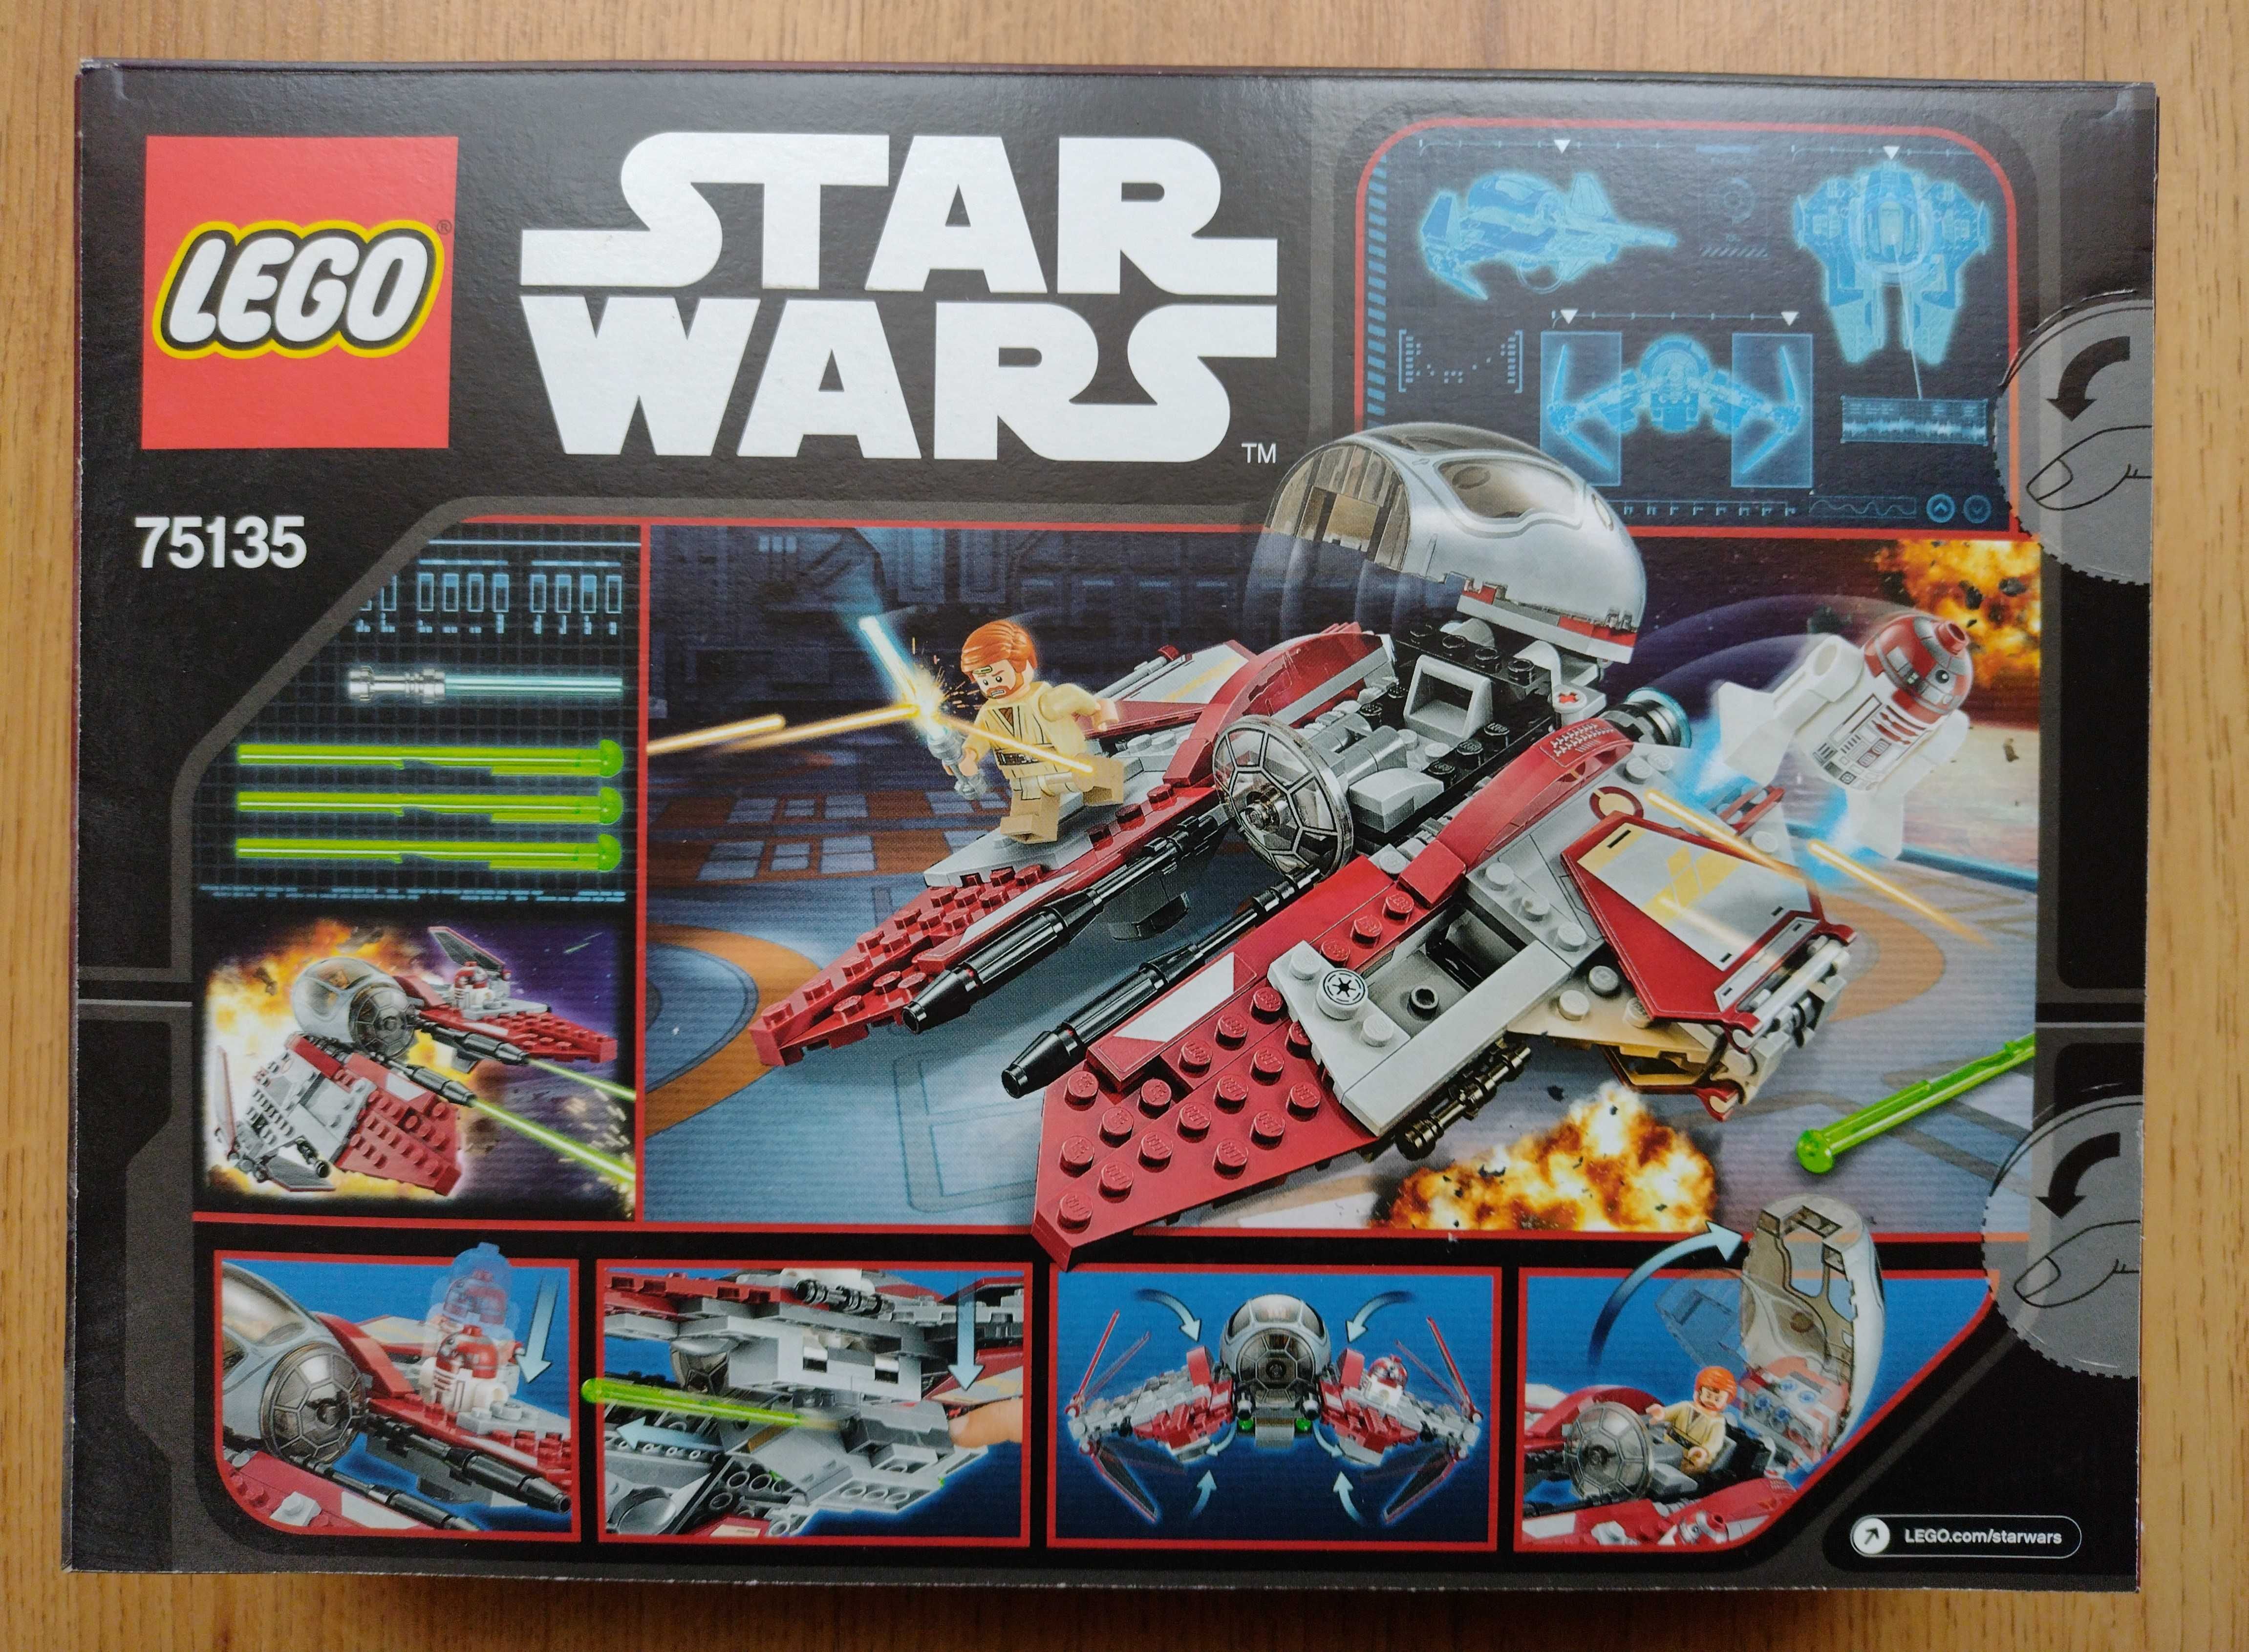 LEGO 75135 Star Wars - Jedi Interceptor Obi-Wana